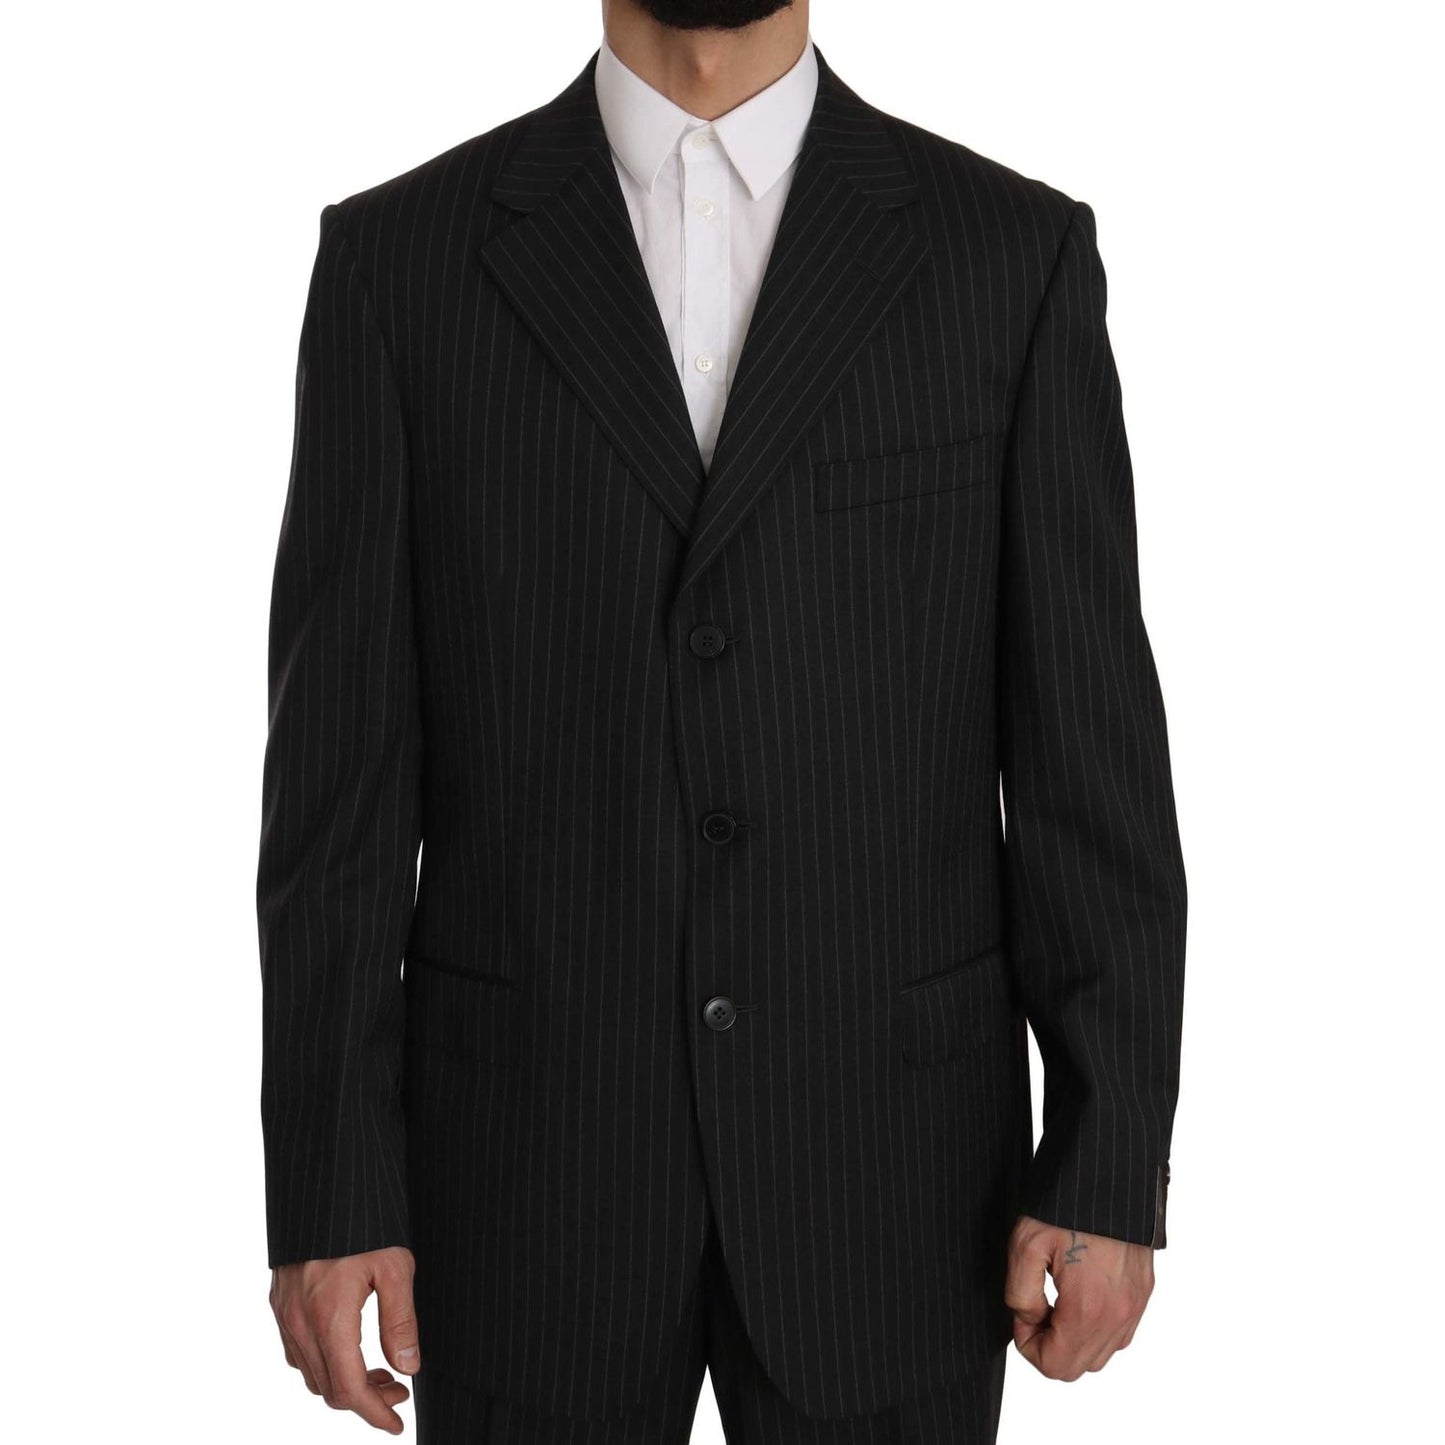 Z ZEGNA Elegant Black Striped Wool Suit Suit black-striped-two-piece-3-button-100-wool-suit IMG_7801-scaled.jpg